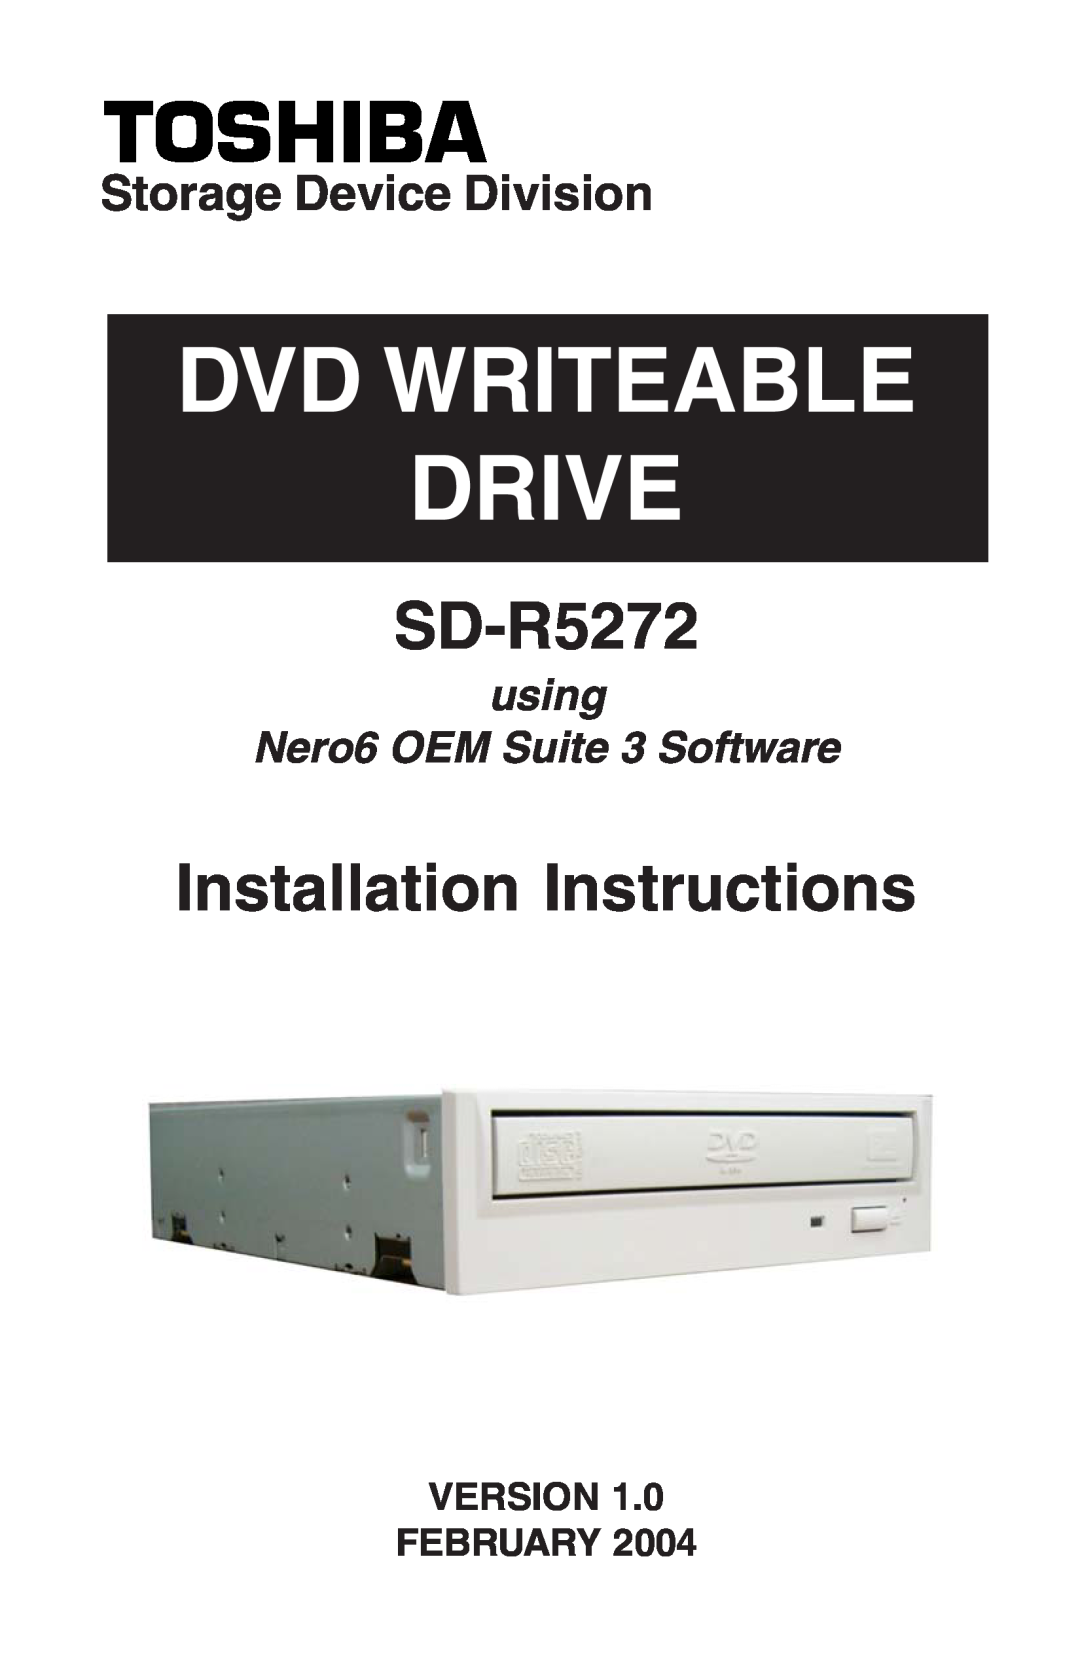 Toshiba SD-R5272 installation instructions Dvd Writeable Drive, Toshiba, Installation Instructions, Version February 